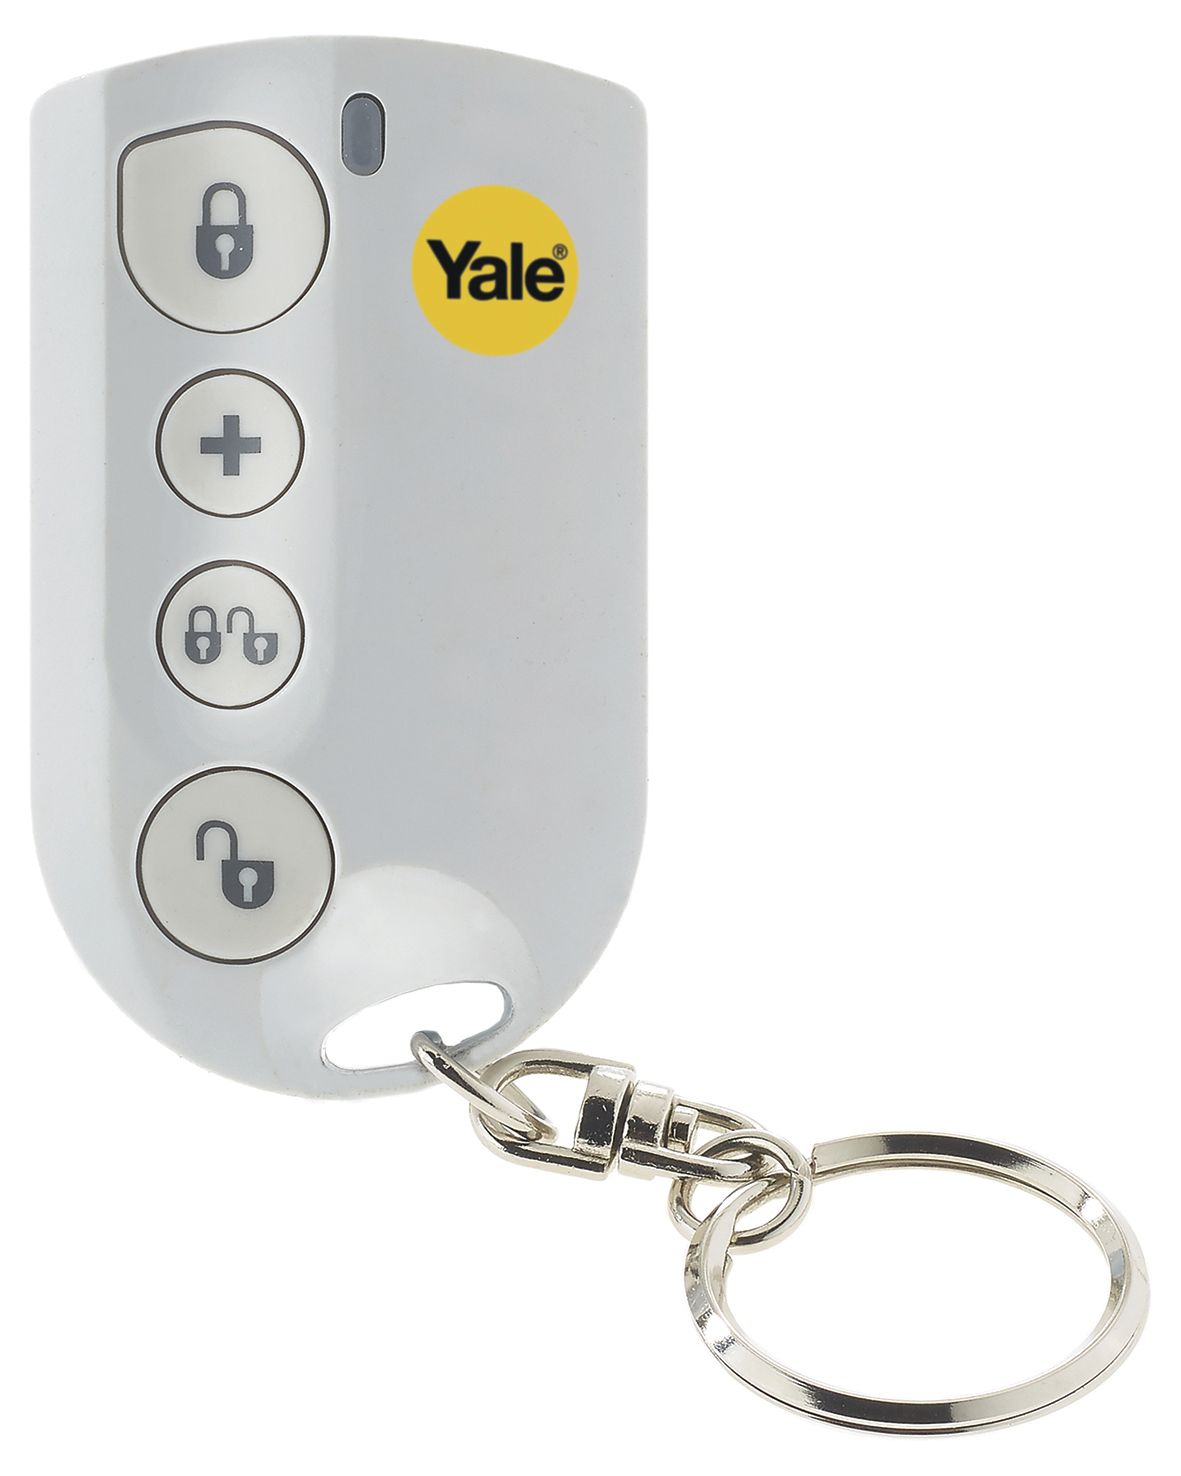 Image of Yale B-HSA6060 Wireless Home Security Alarm Keyfob